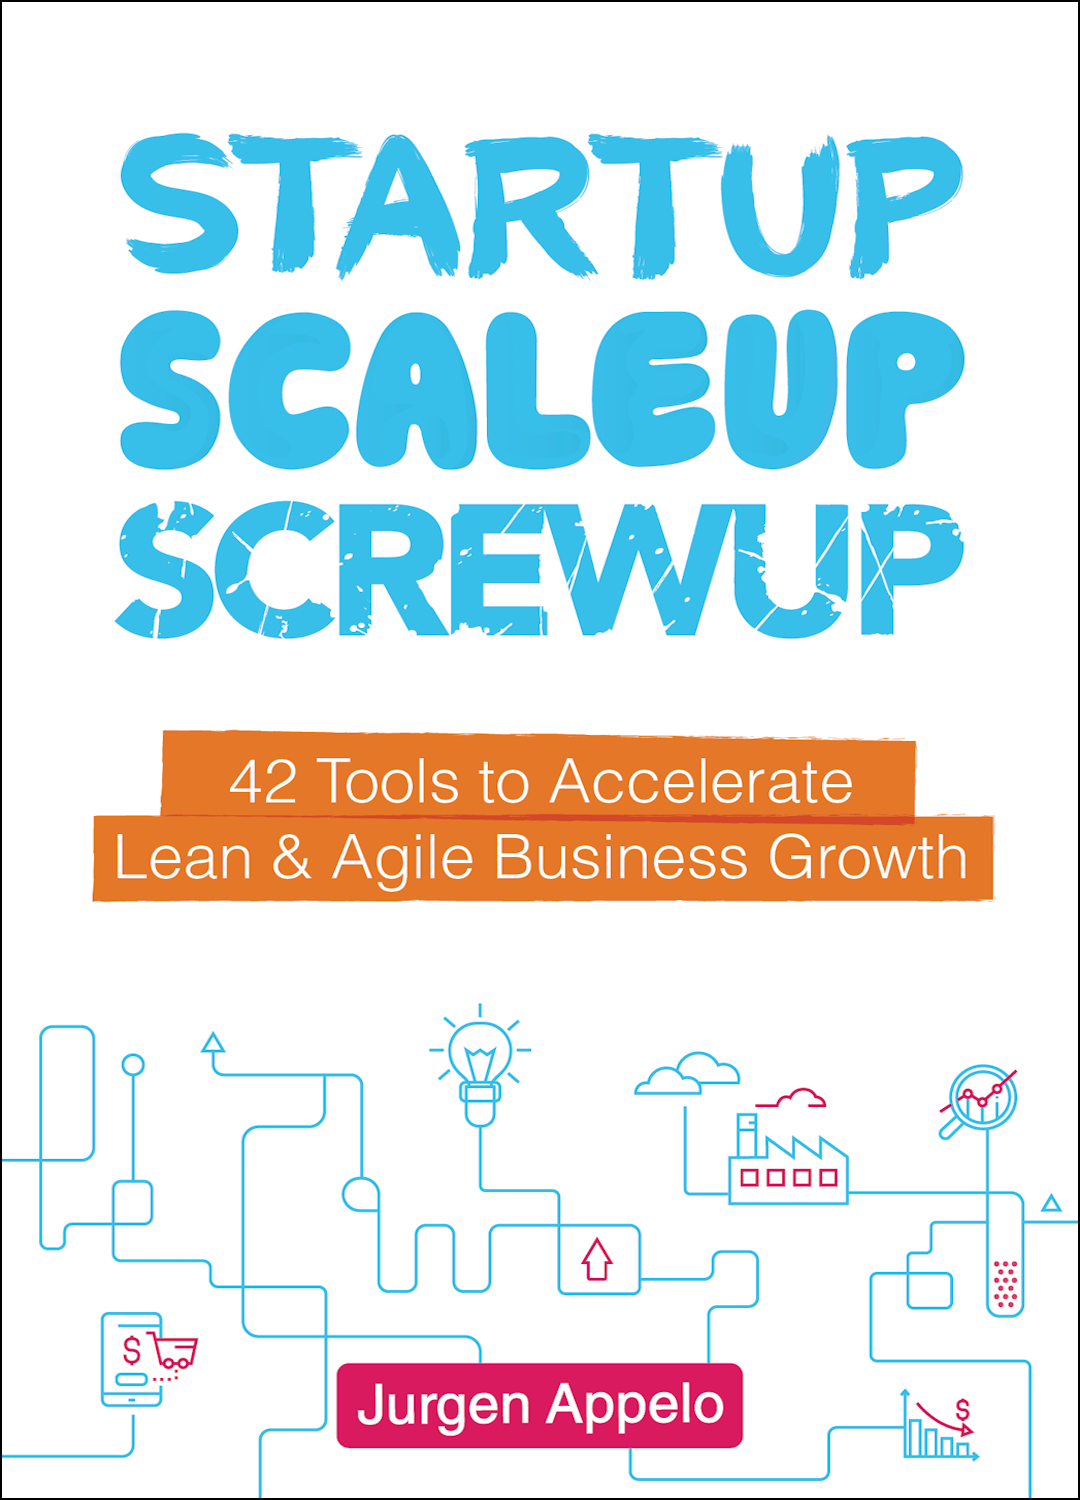 Startup Scaleup Screwup